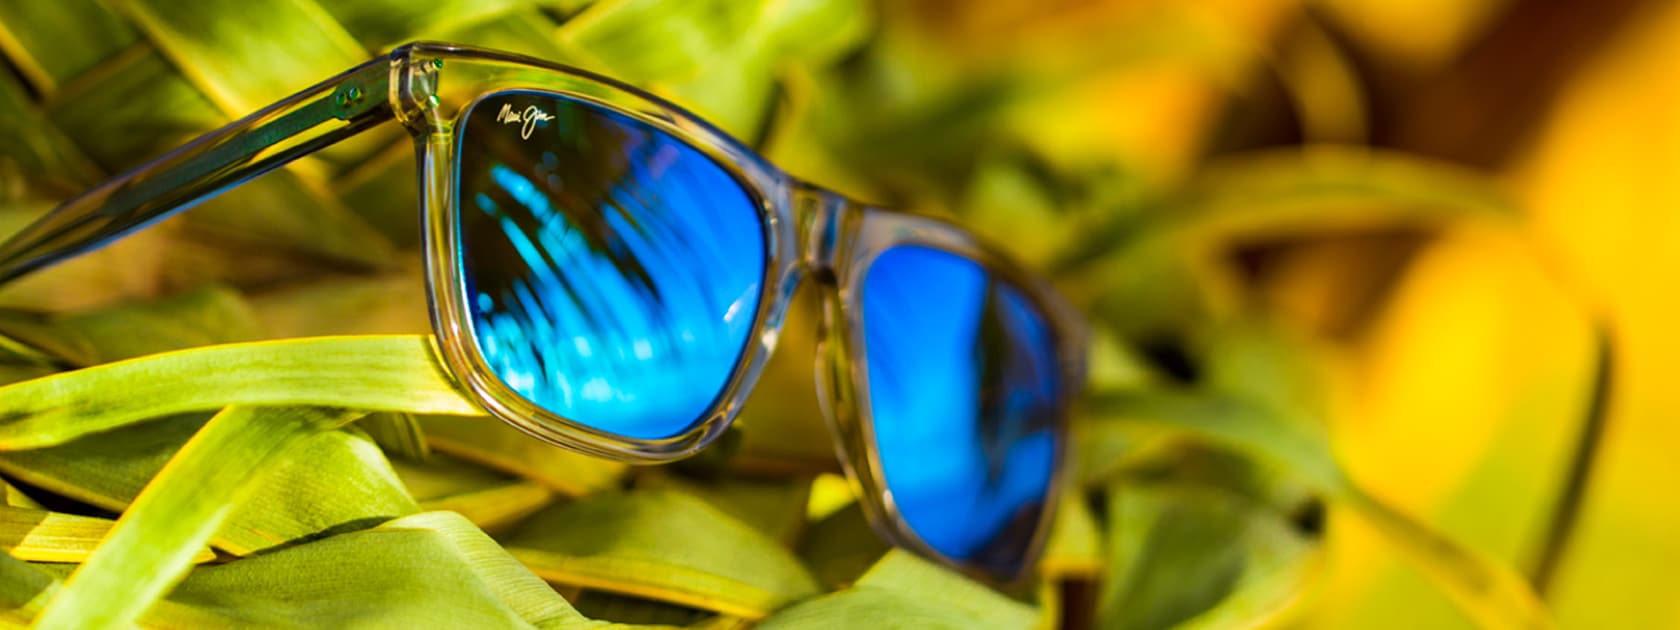 occhiali da sole con montatura trasparente e lenti blu mostrati su foglie di palma verdi